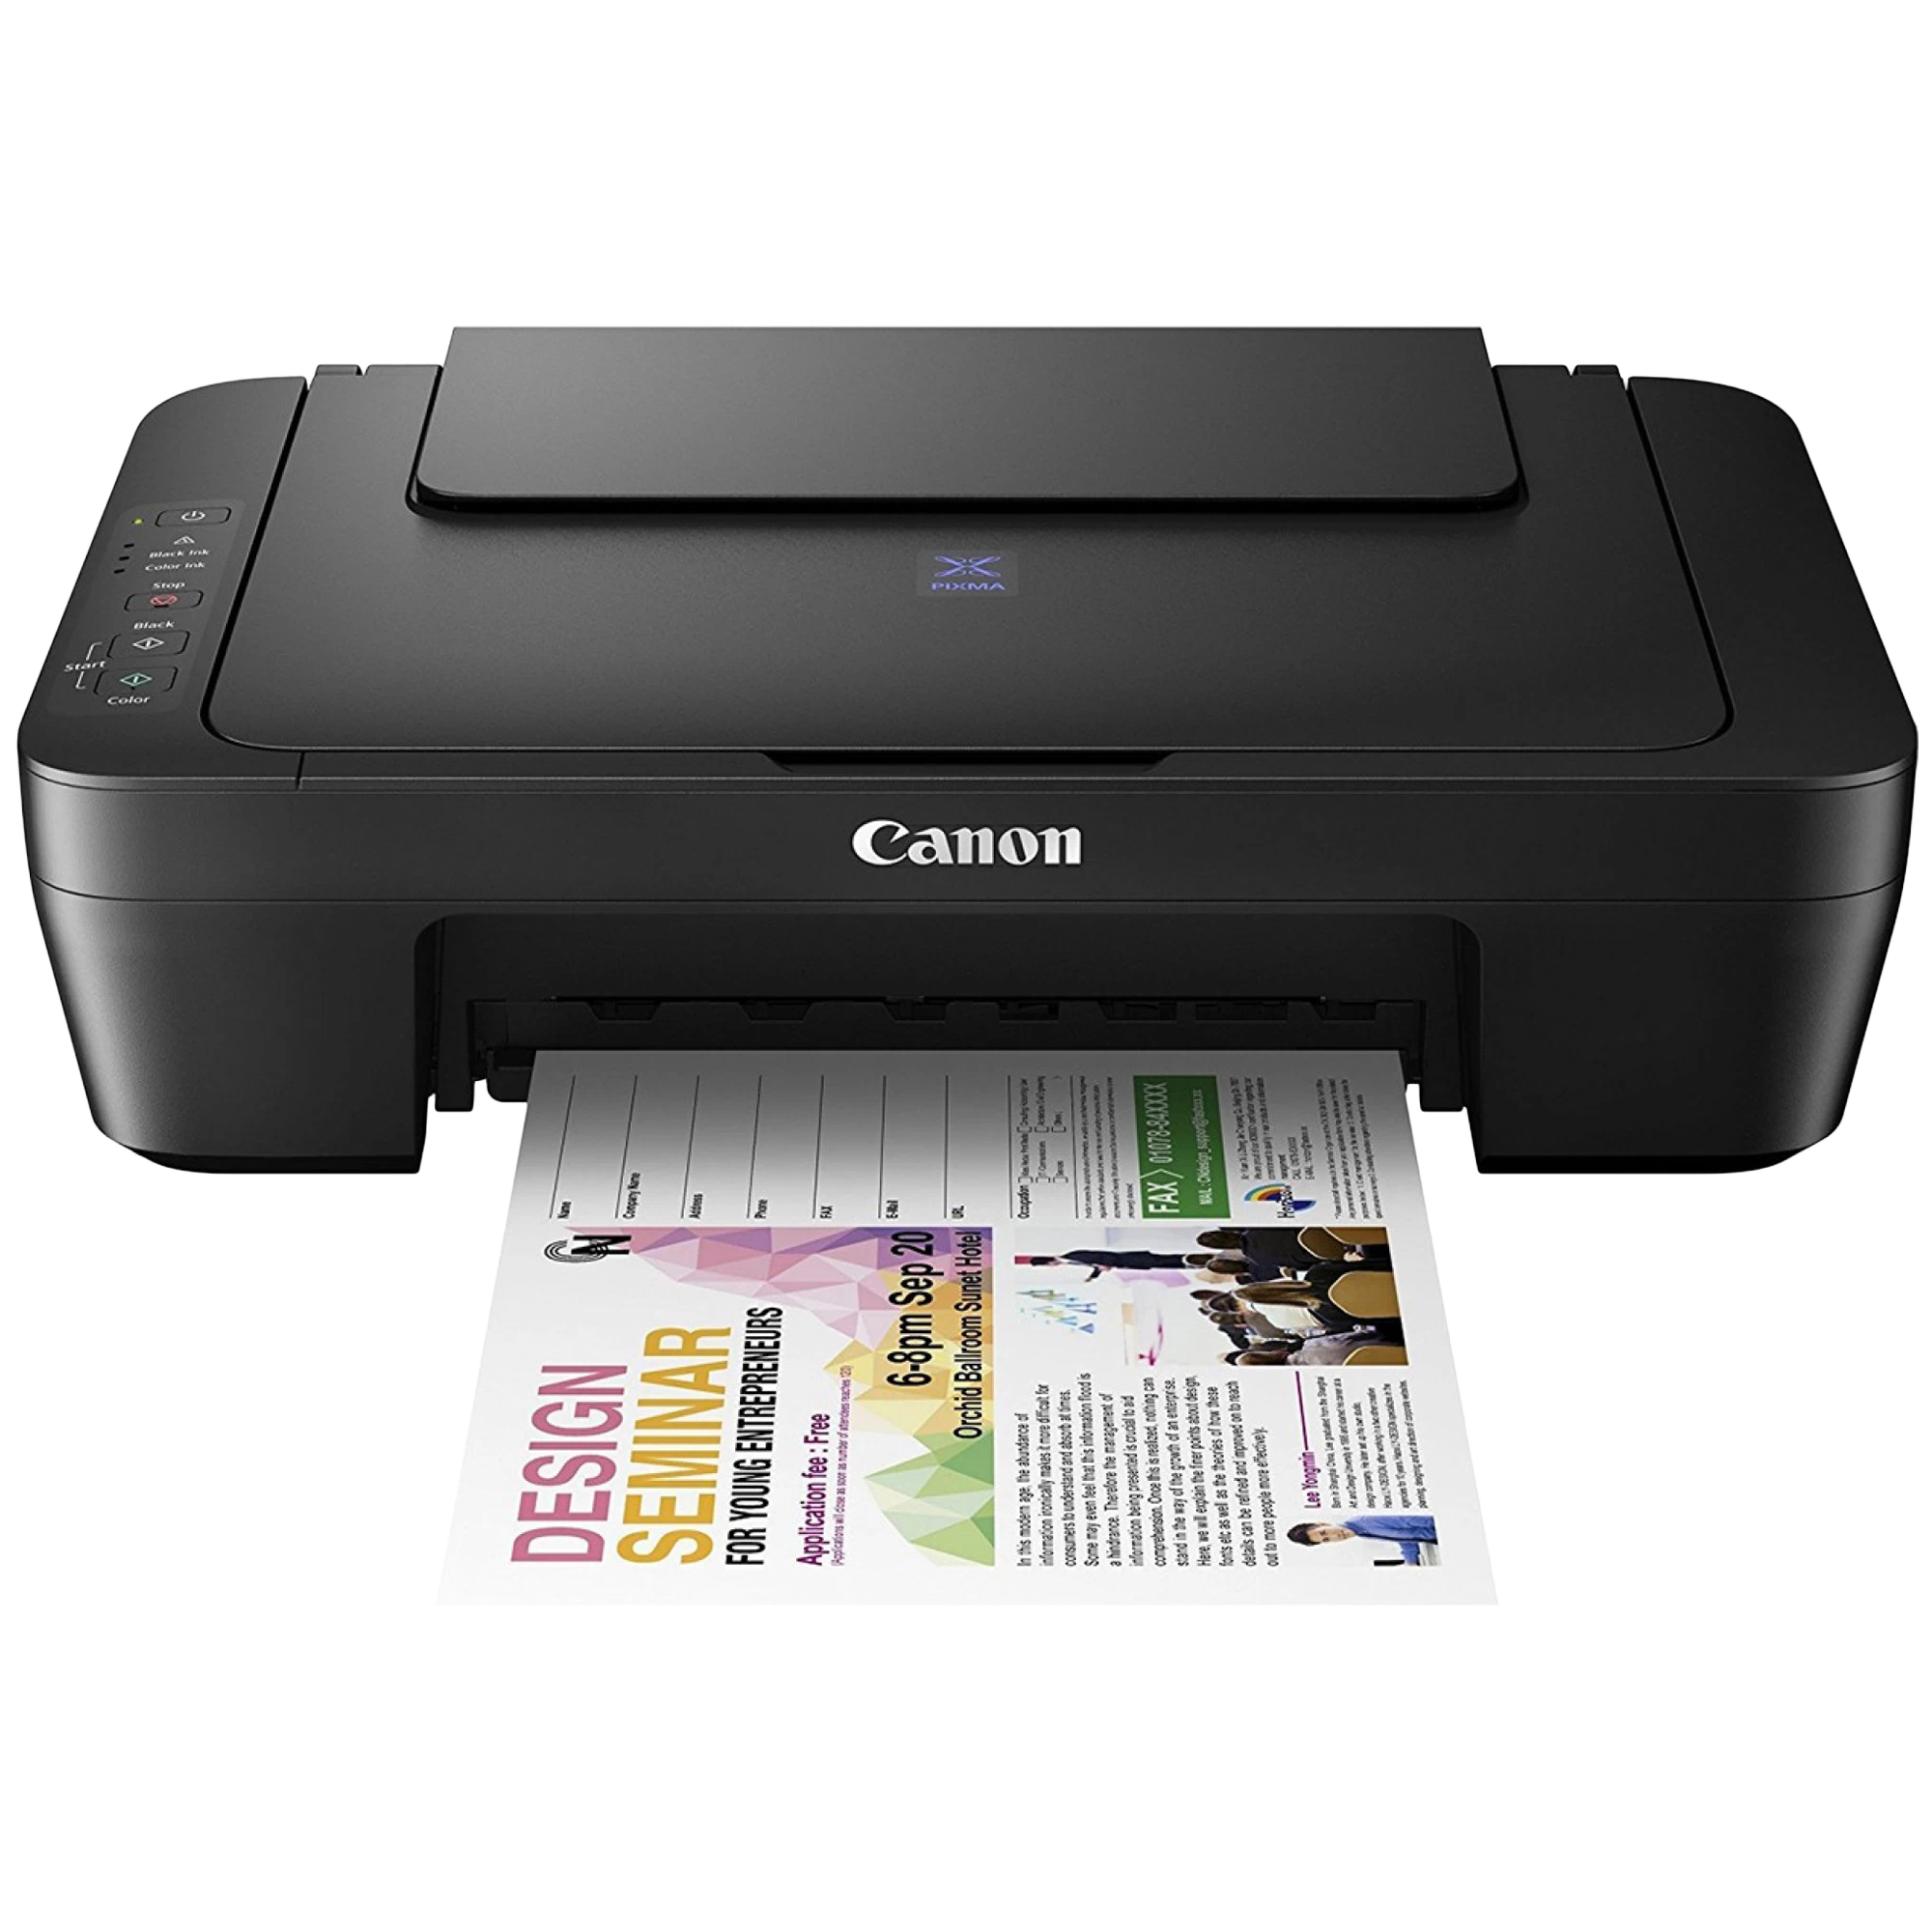 Buy Canon Pixma E410 Color All-in-One Inkjet Printer (Contact